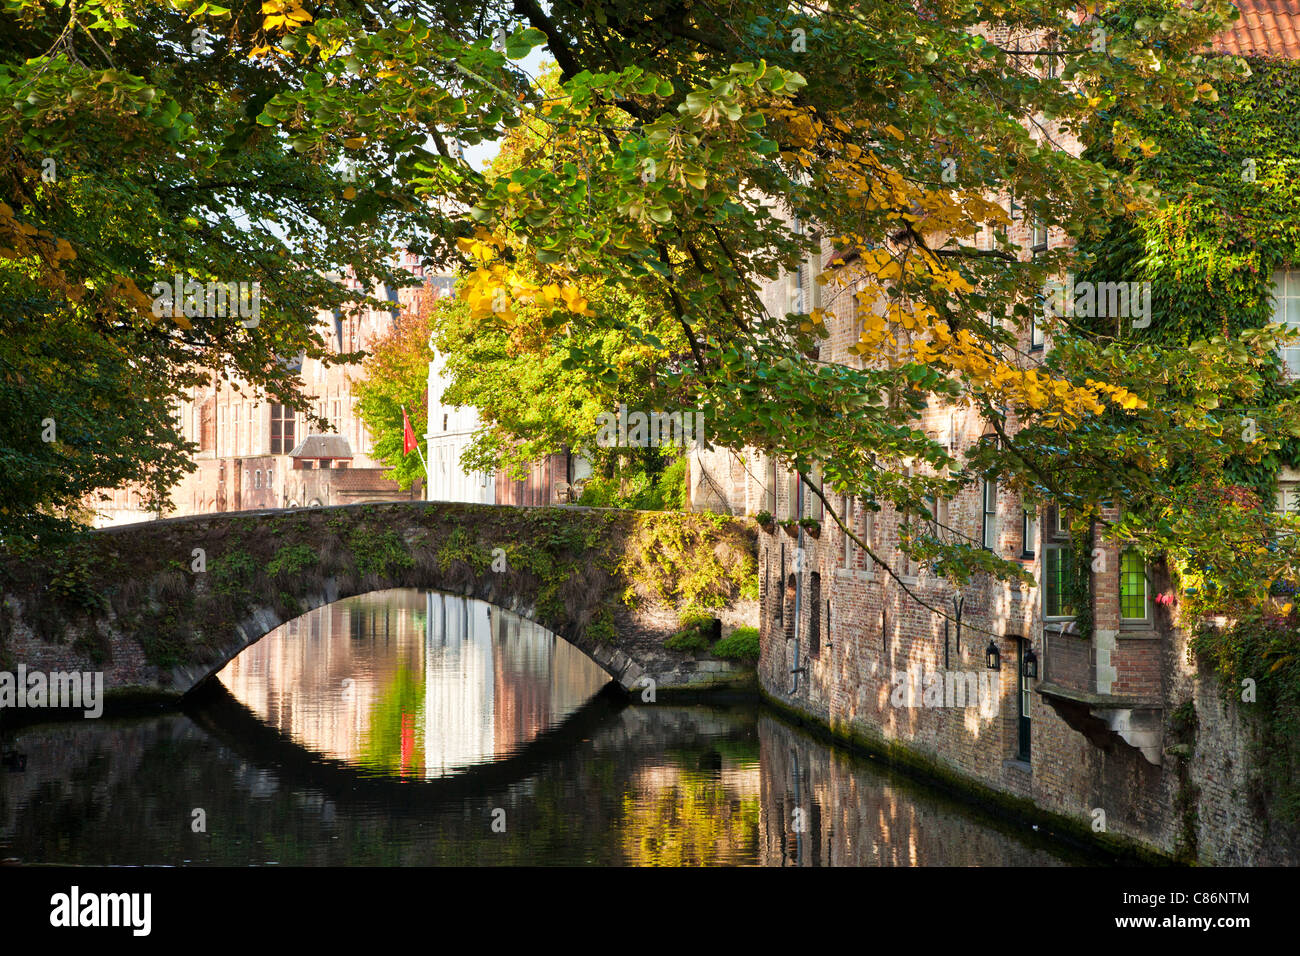 Anfang Herbst Farben entlang der Steenhouwers Dijk Canal und die steinerne Brücke in Brügge, Belgien Stockfoto